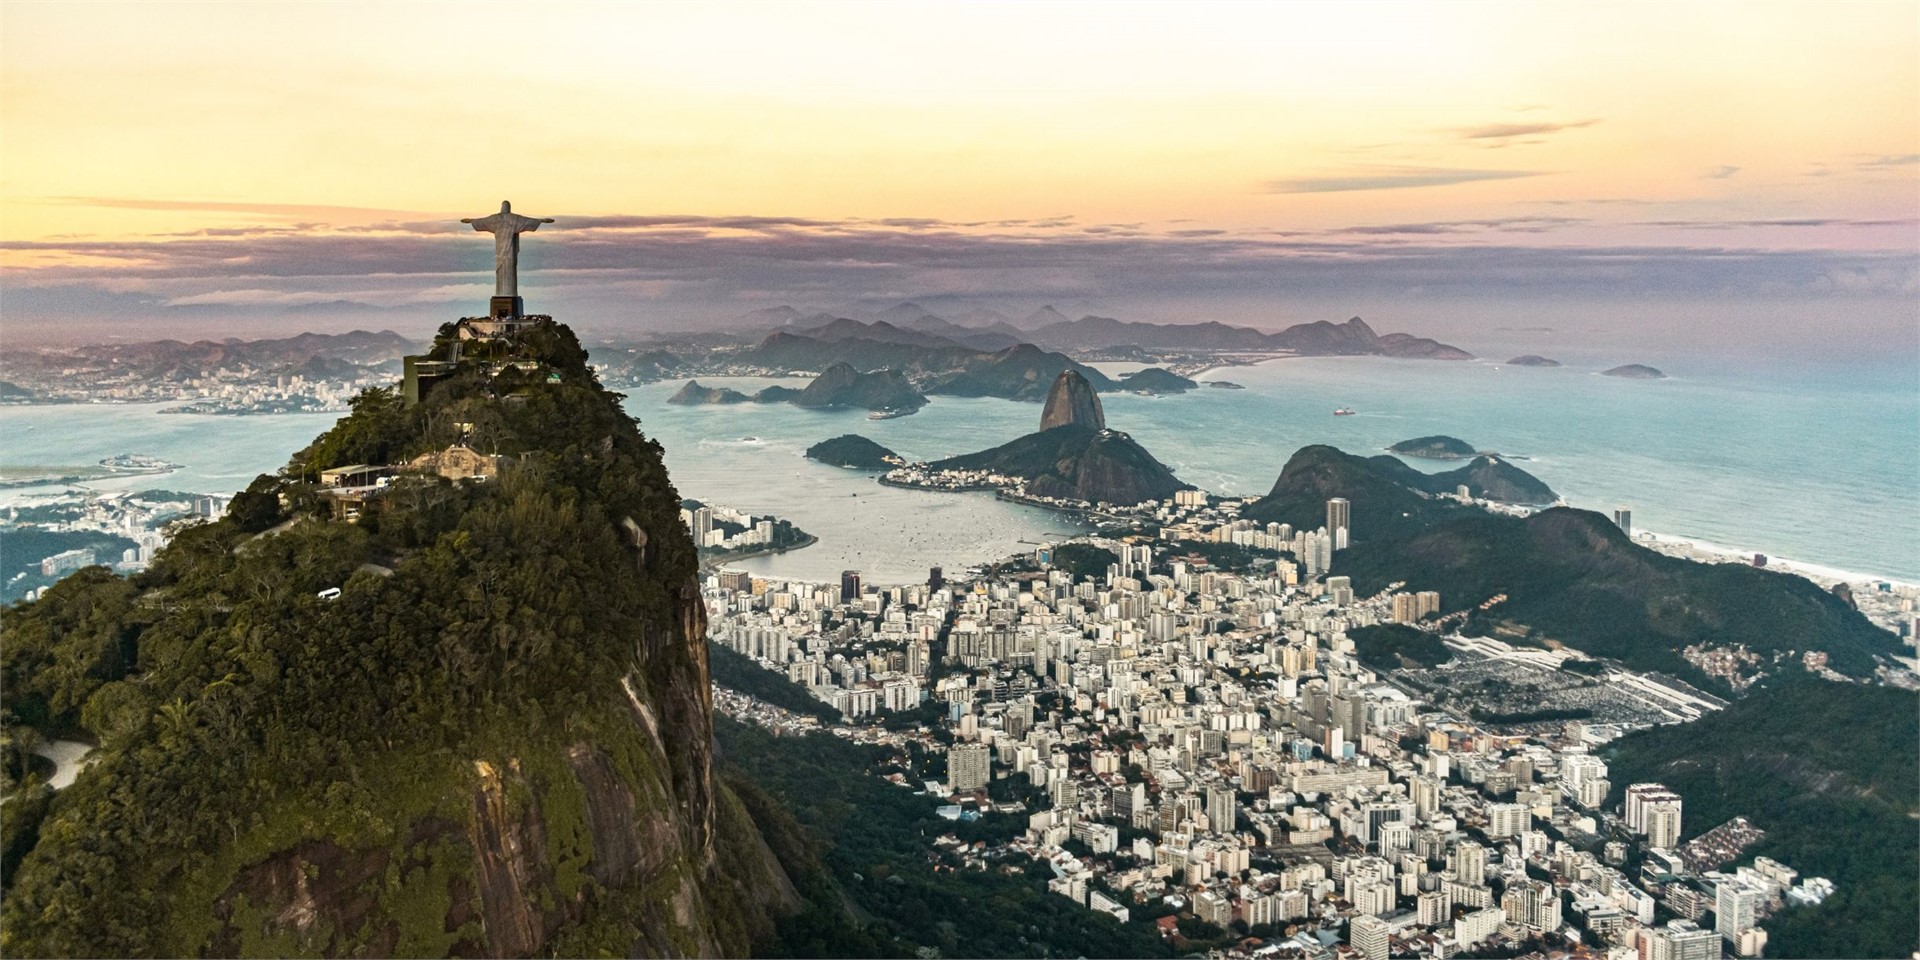 Book your trip to the Rock in Rio Festival in Rio de Janeiro
